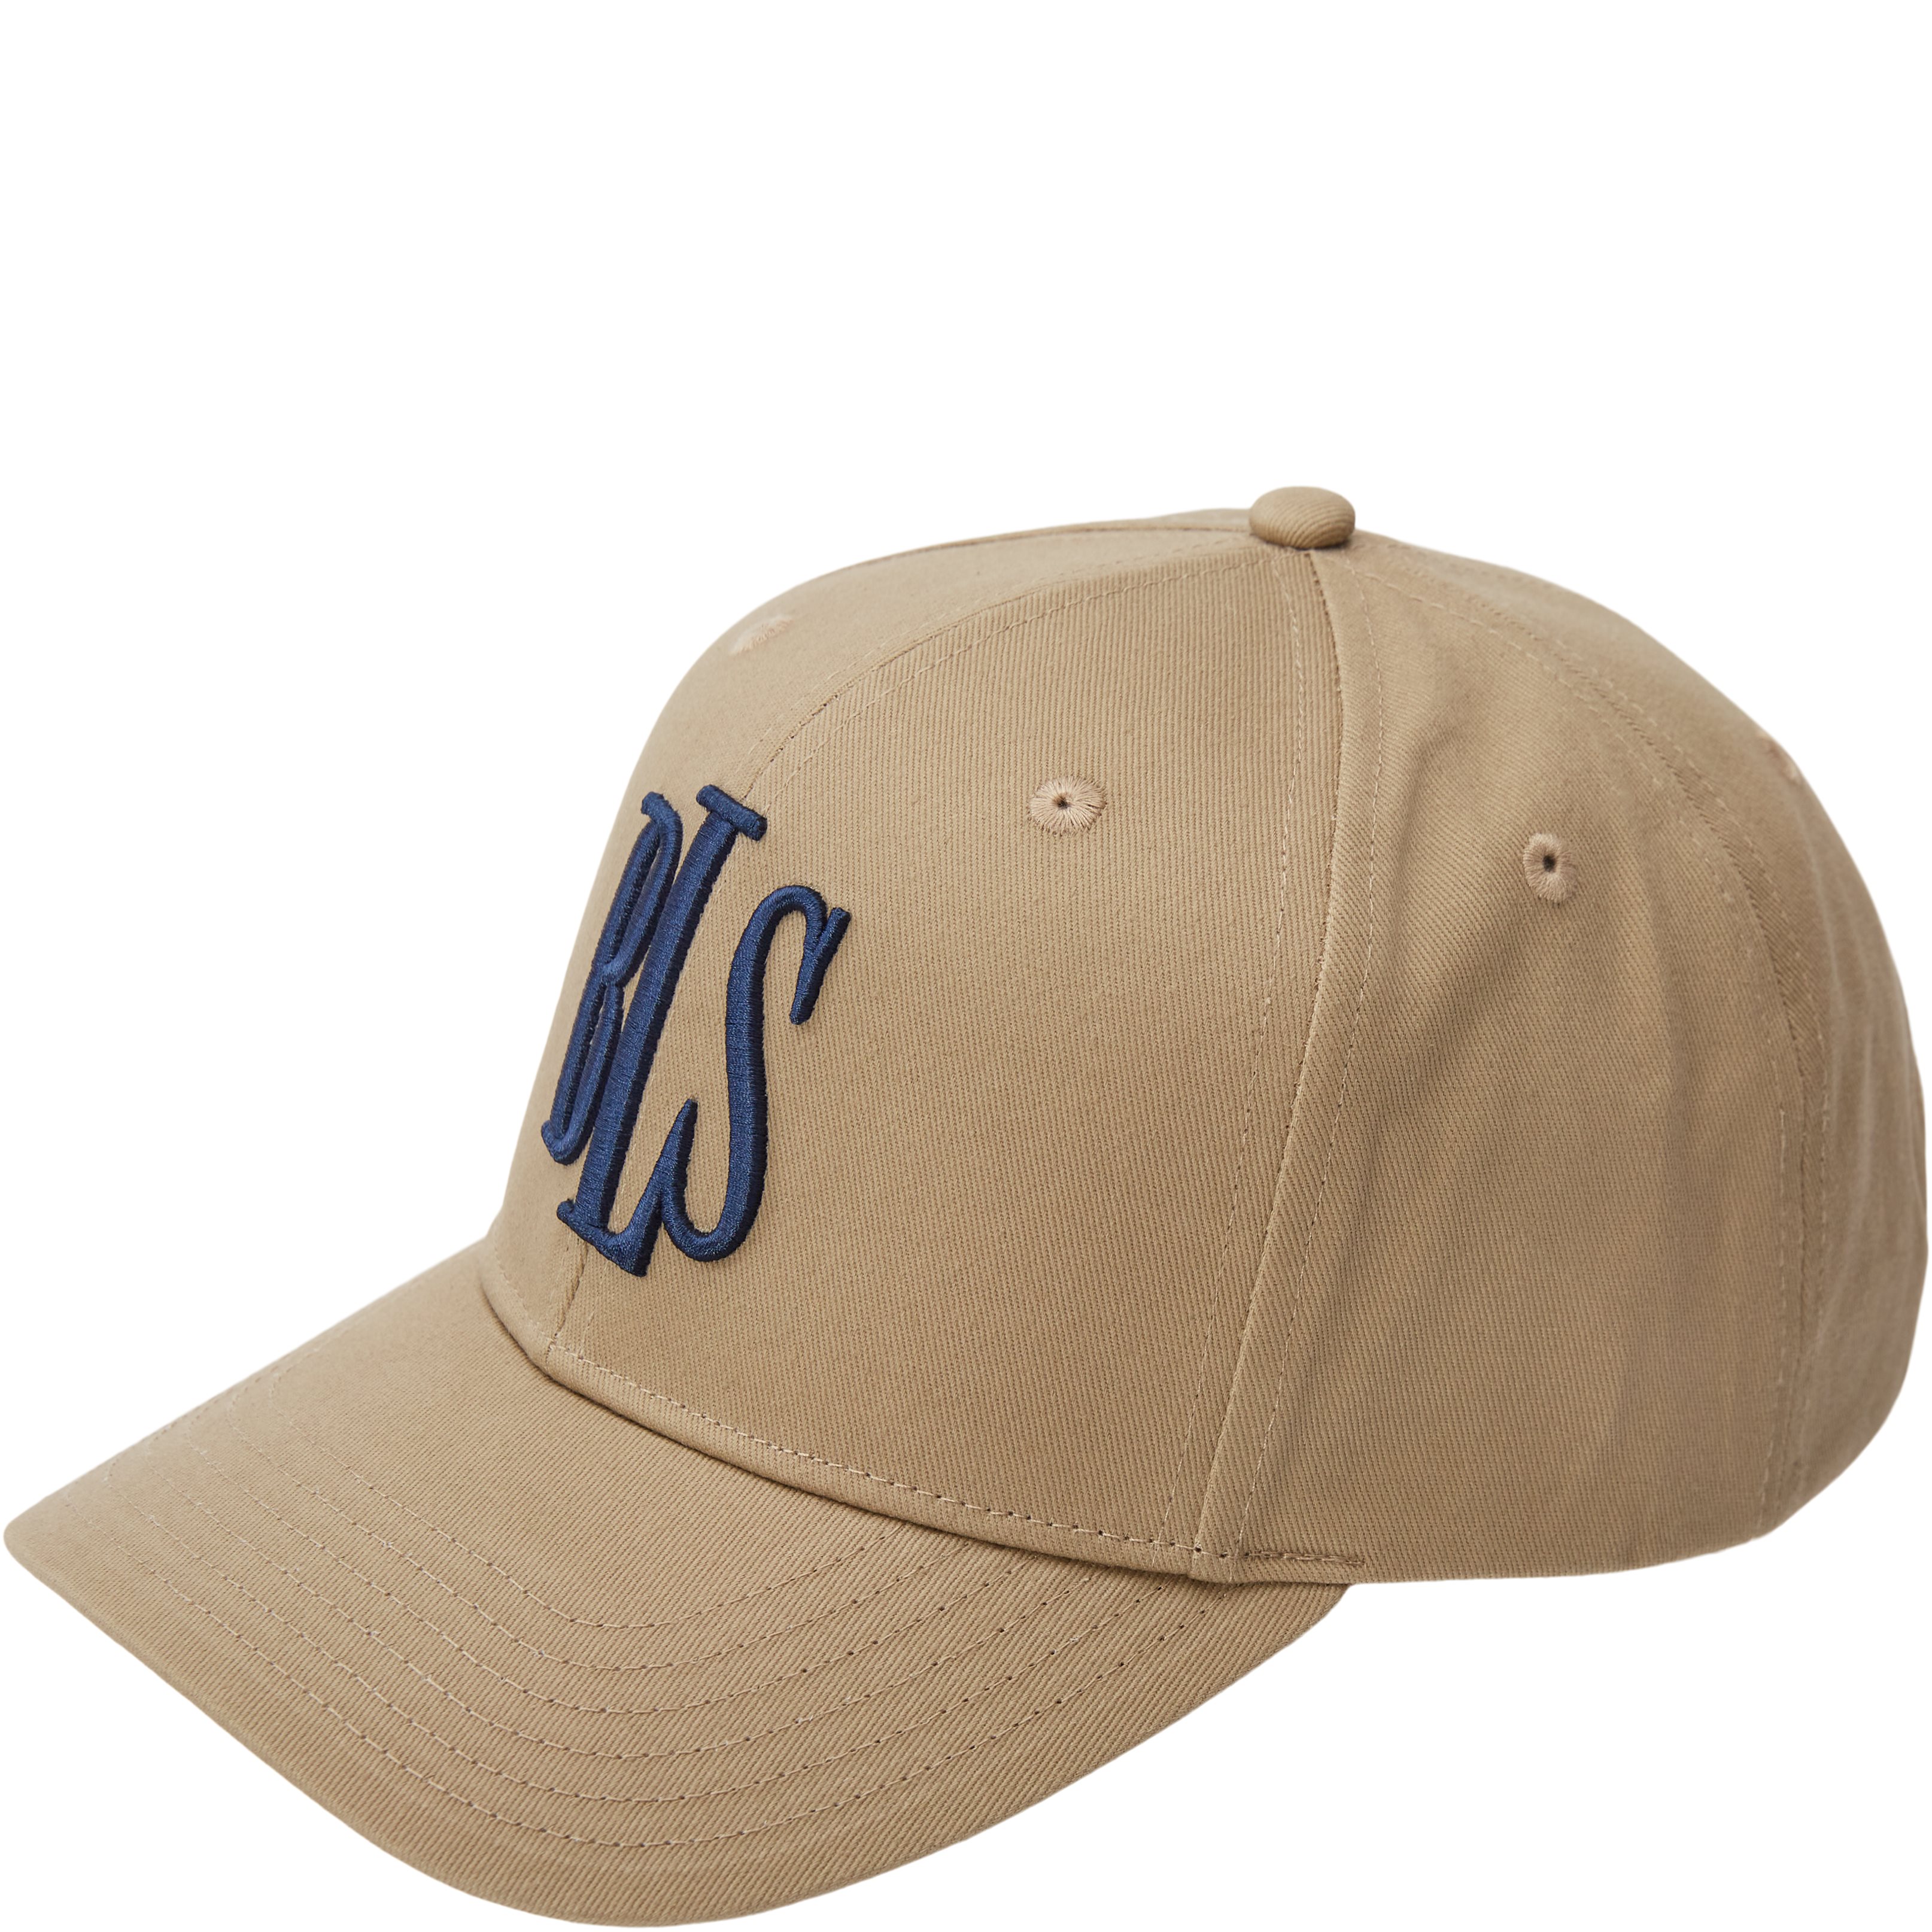 Classic Baseball Cap - Beanies - Regular fit - Sand